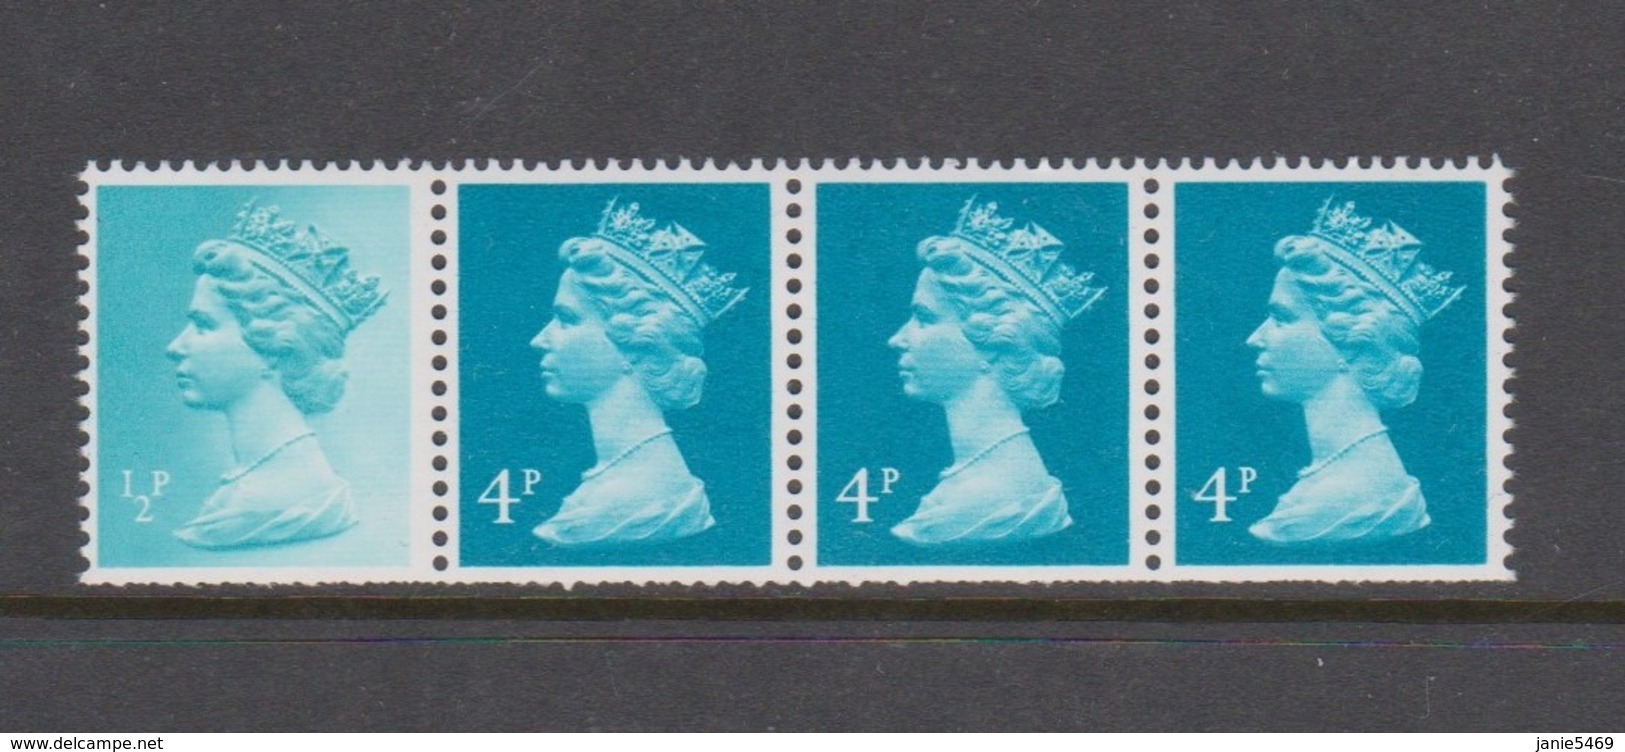 Great Britain SG B 979 Booklet Strip Mint Never Hinged - Gebruikt